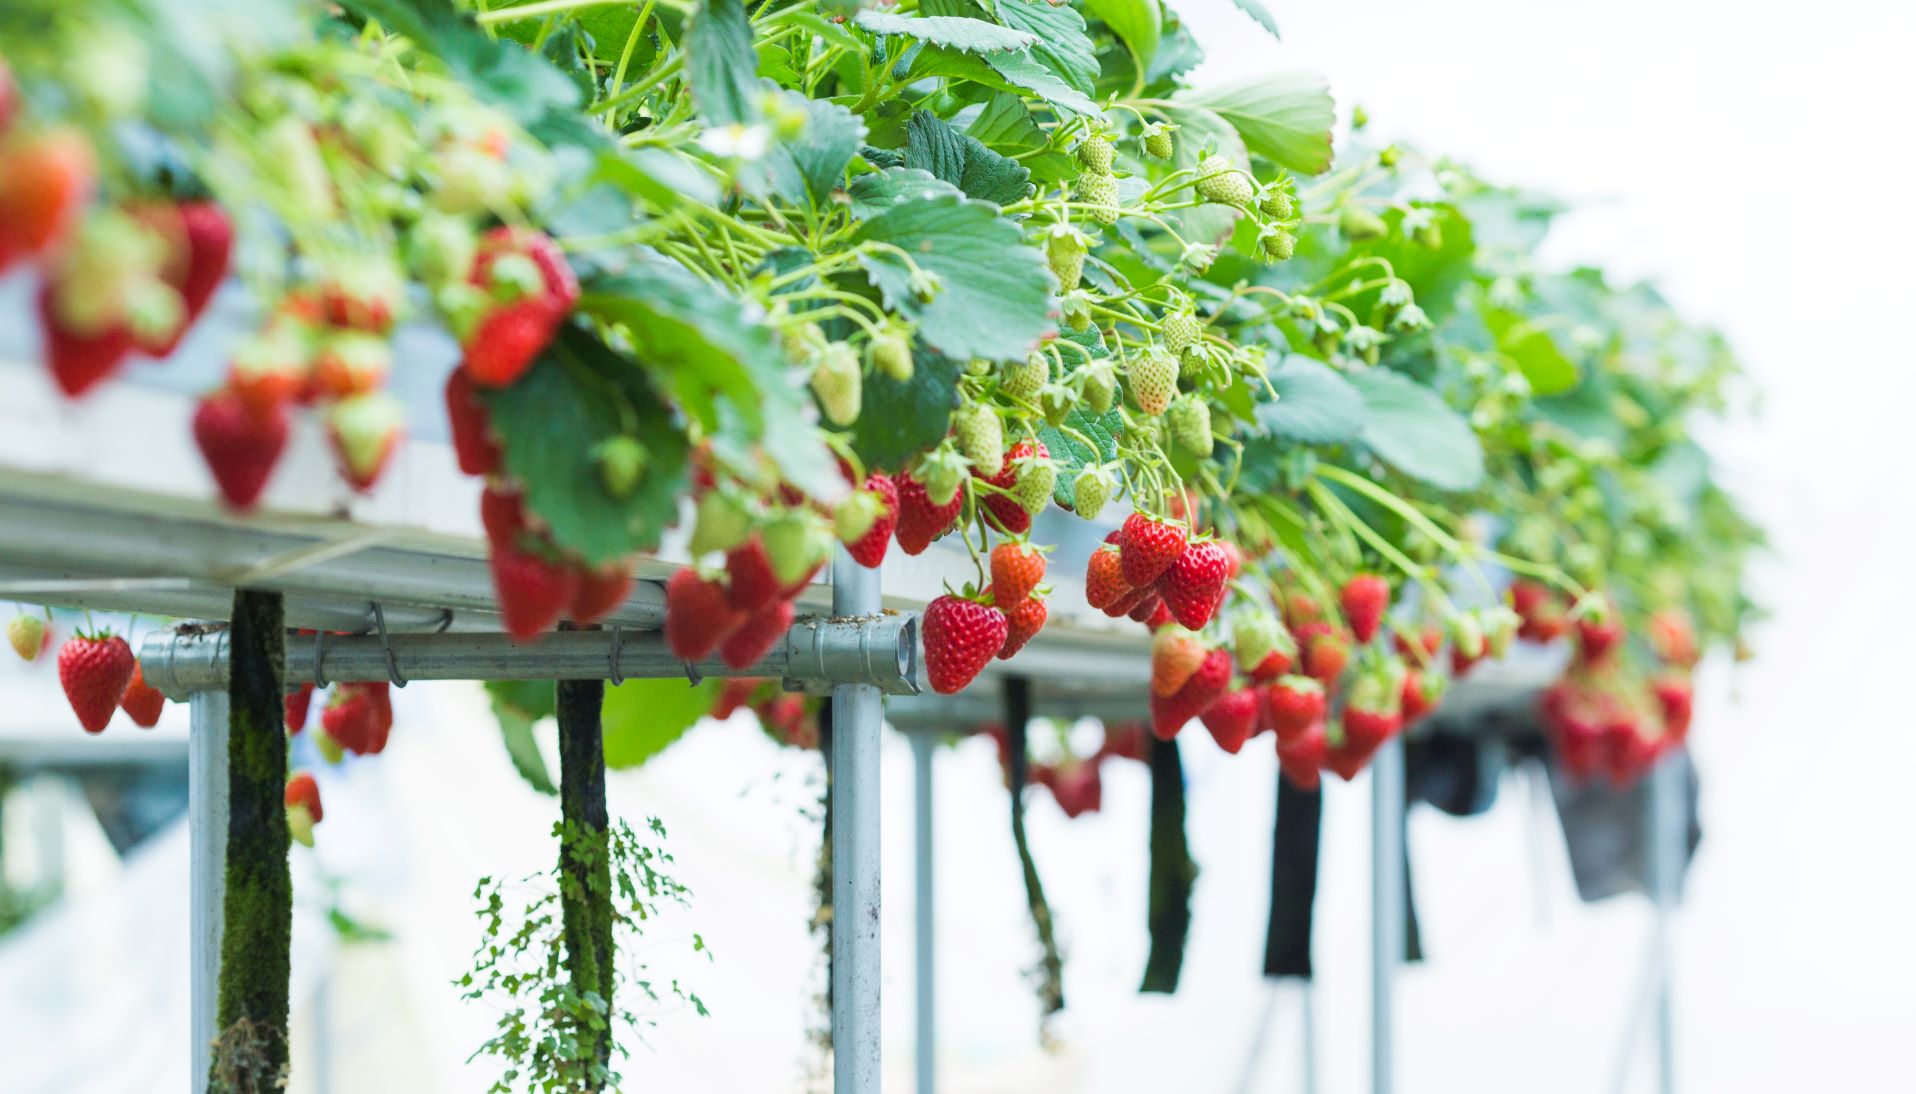 Strawberries growing using hydroponic method